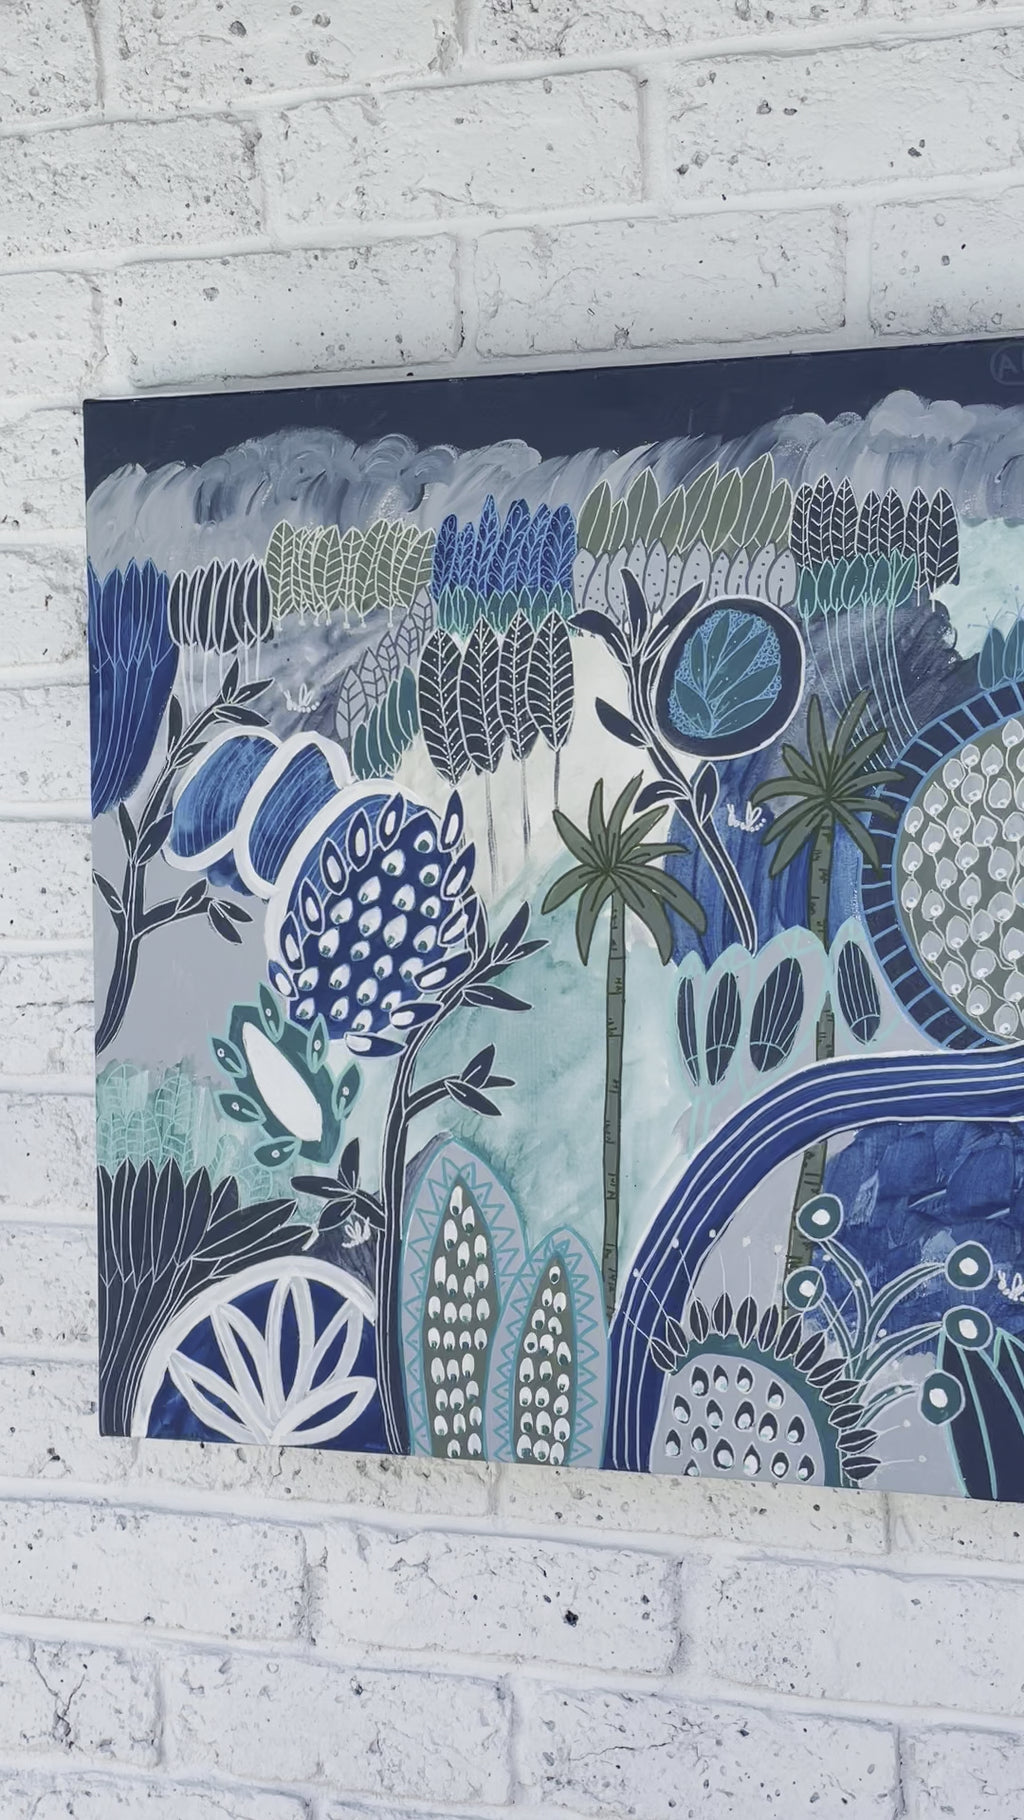 Anna Lohe art work - video of Blue-o-rama on my studio wall